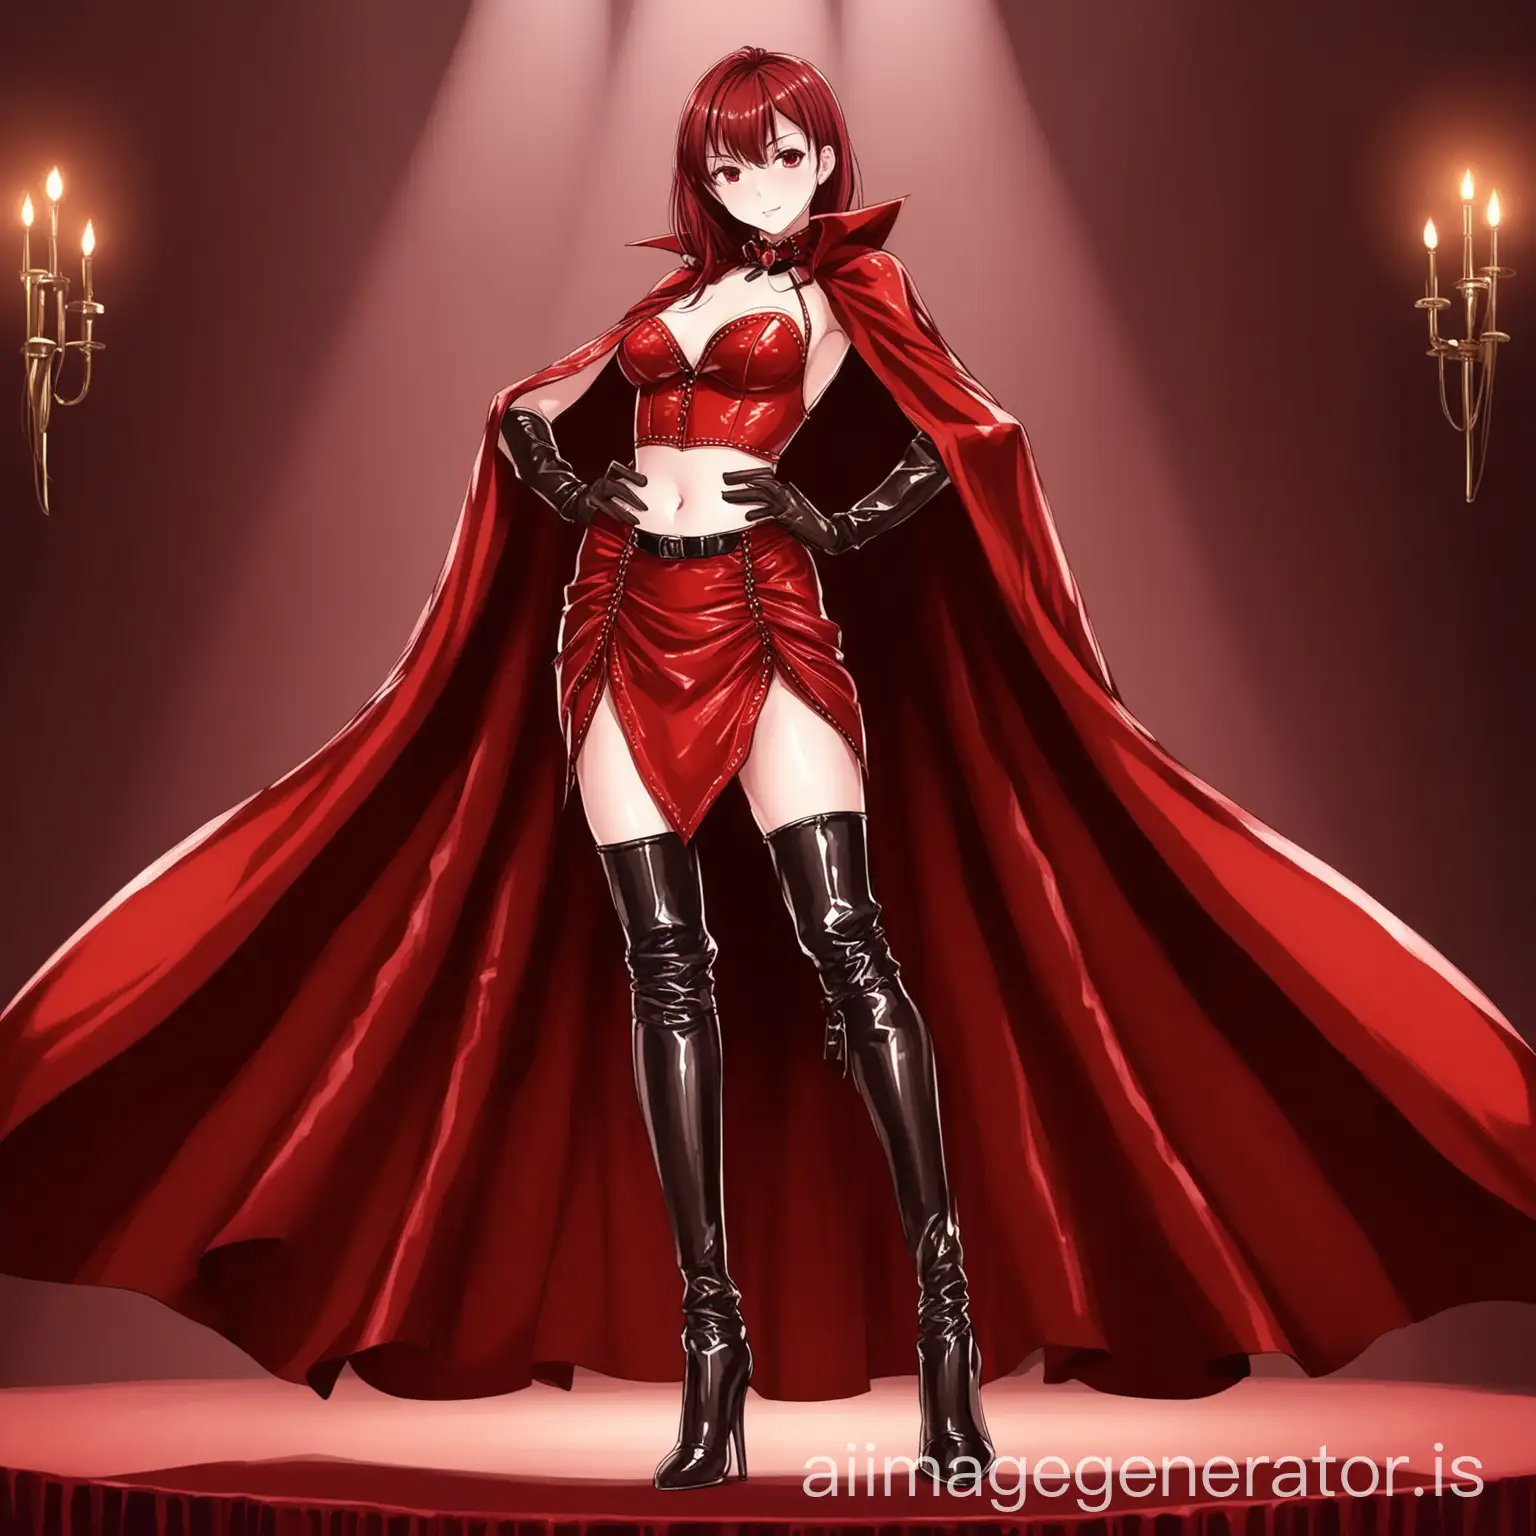 Sultry-Anime-Girl-in-Sensational-Red-Cabaret-Attire